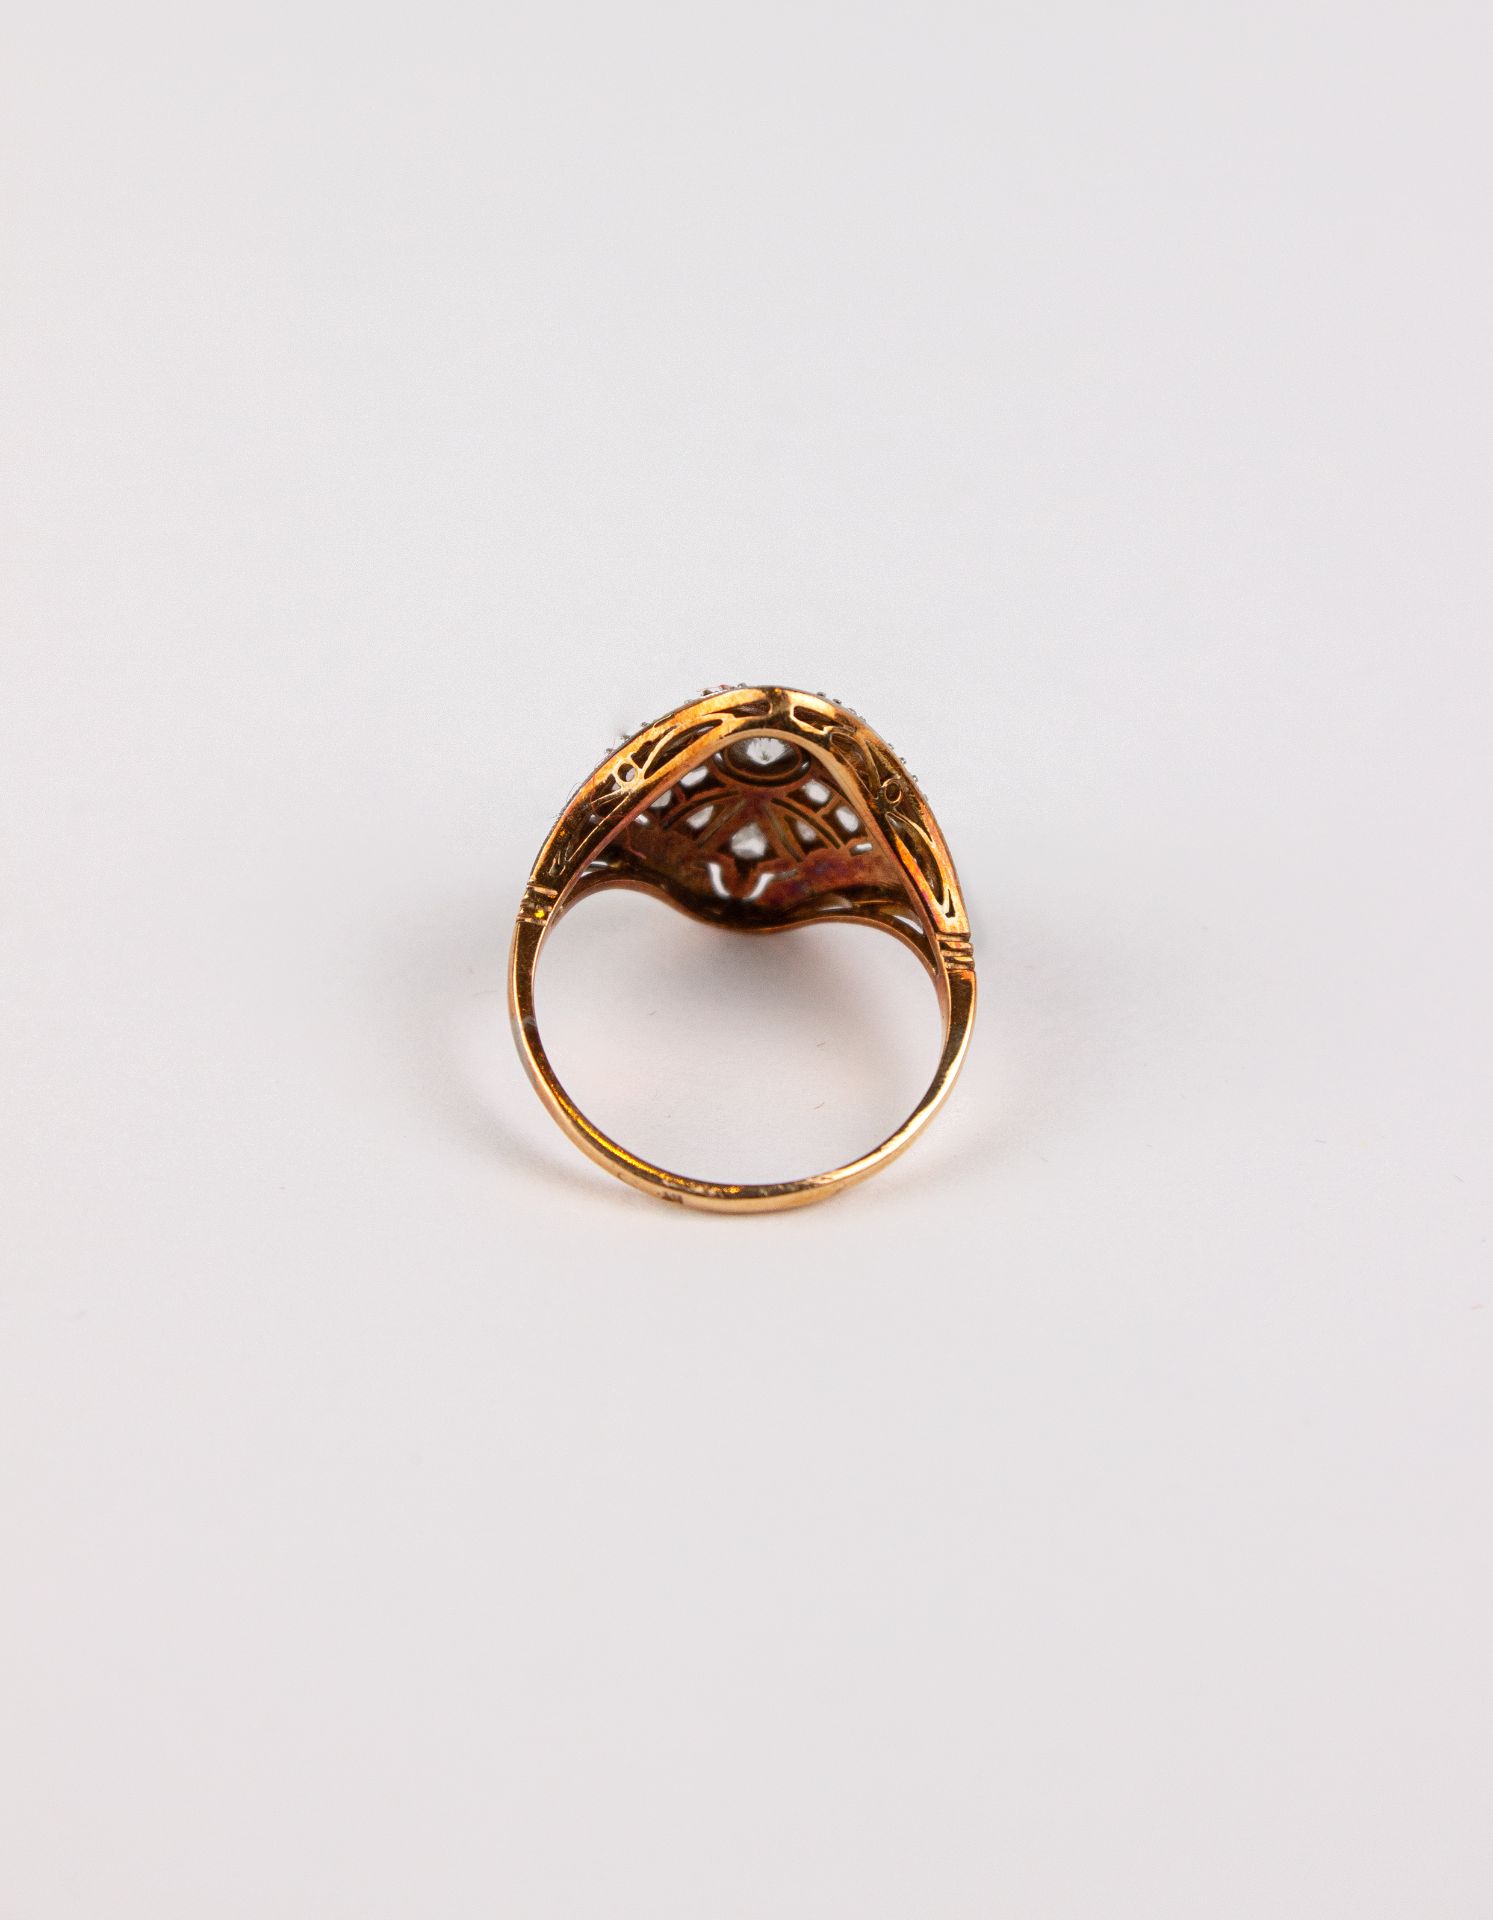 An Art-Déco ring circa 1930. Gold, platinum and diamonds - Image 2 of 3